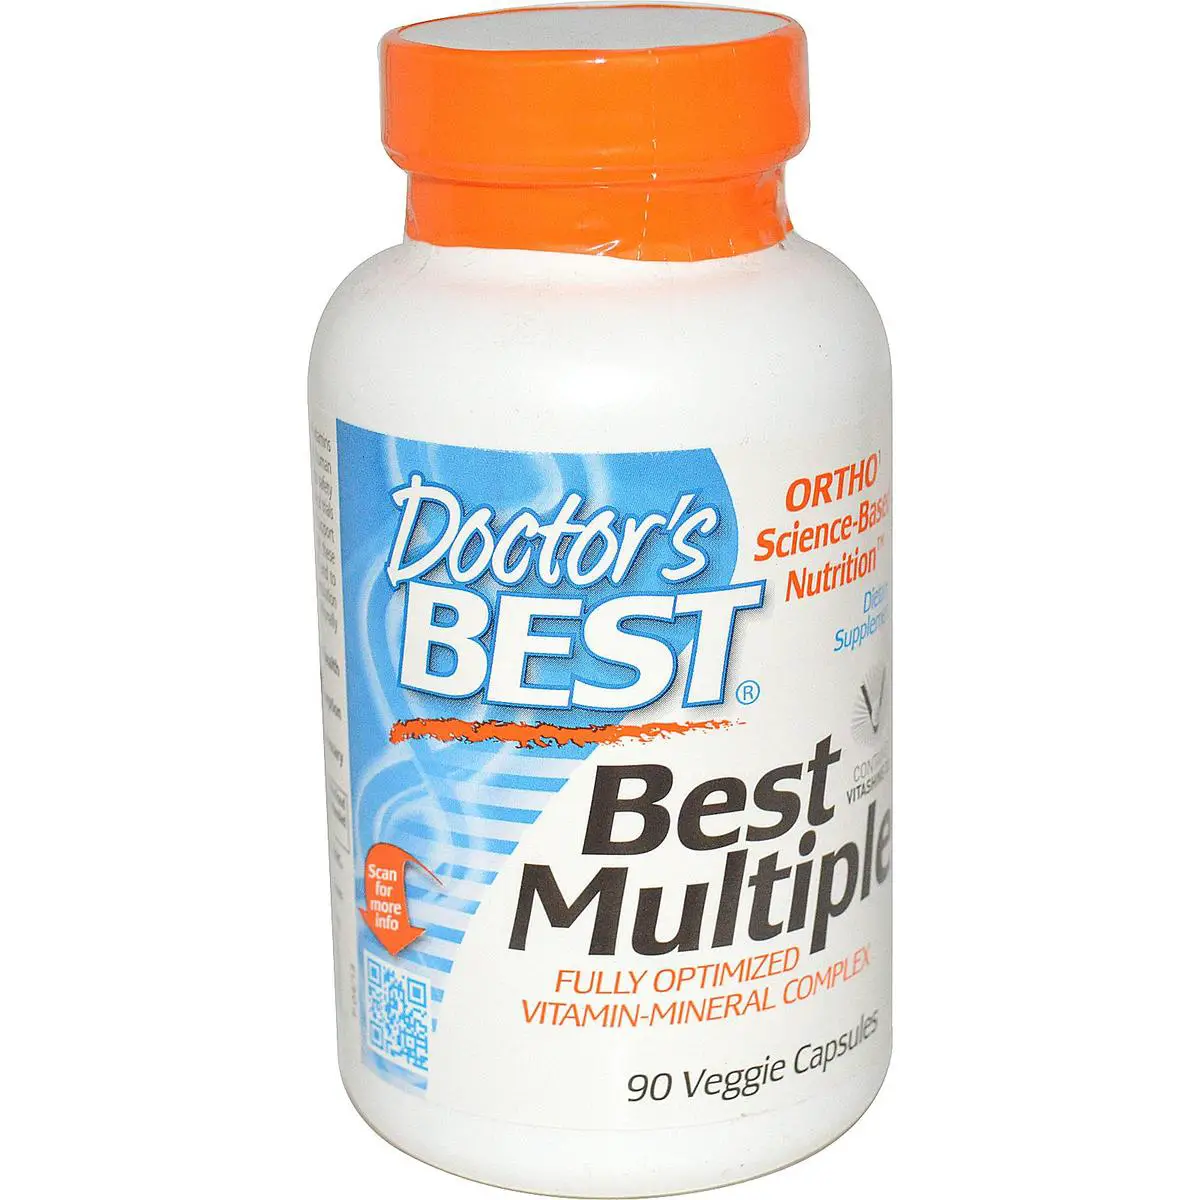 Buy Best Multiple Fully Optimised Vitamin